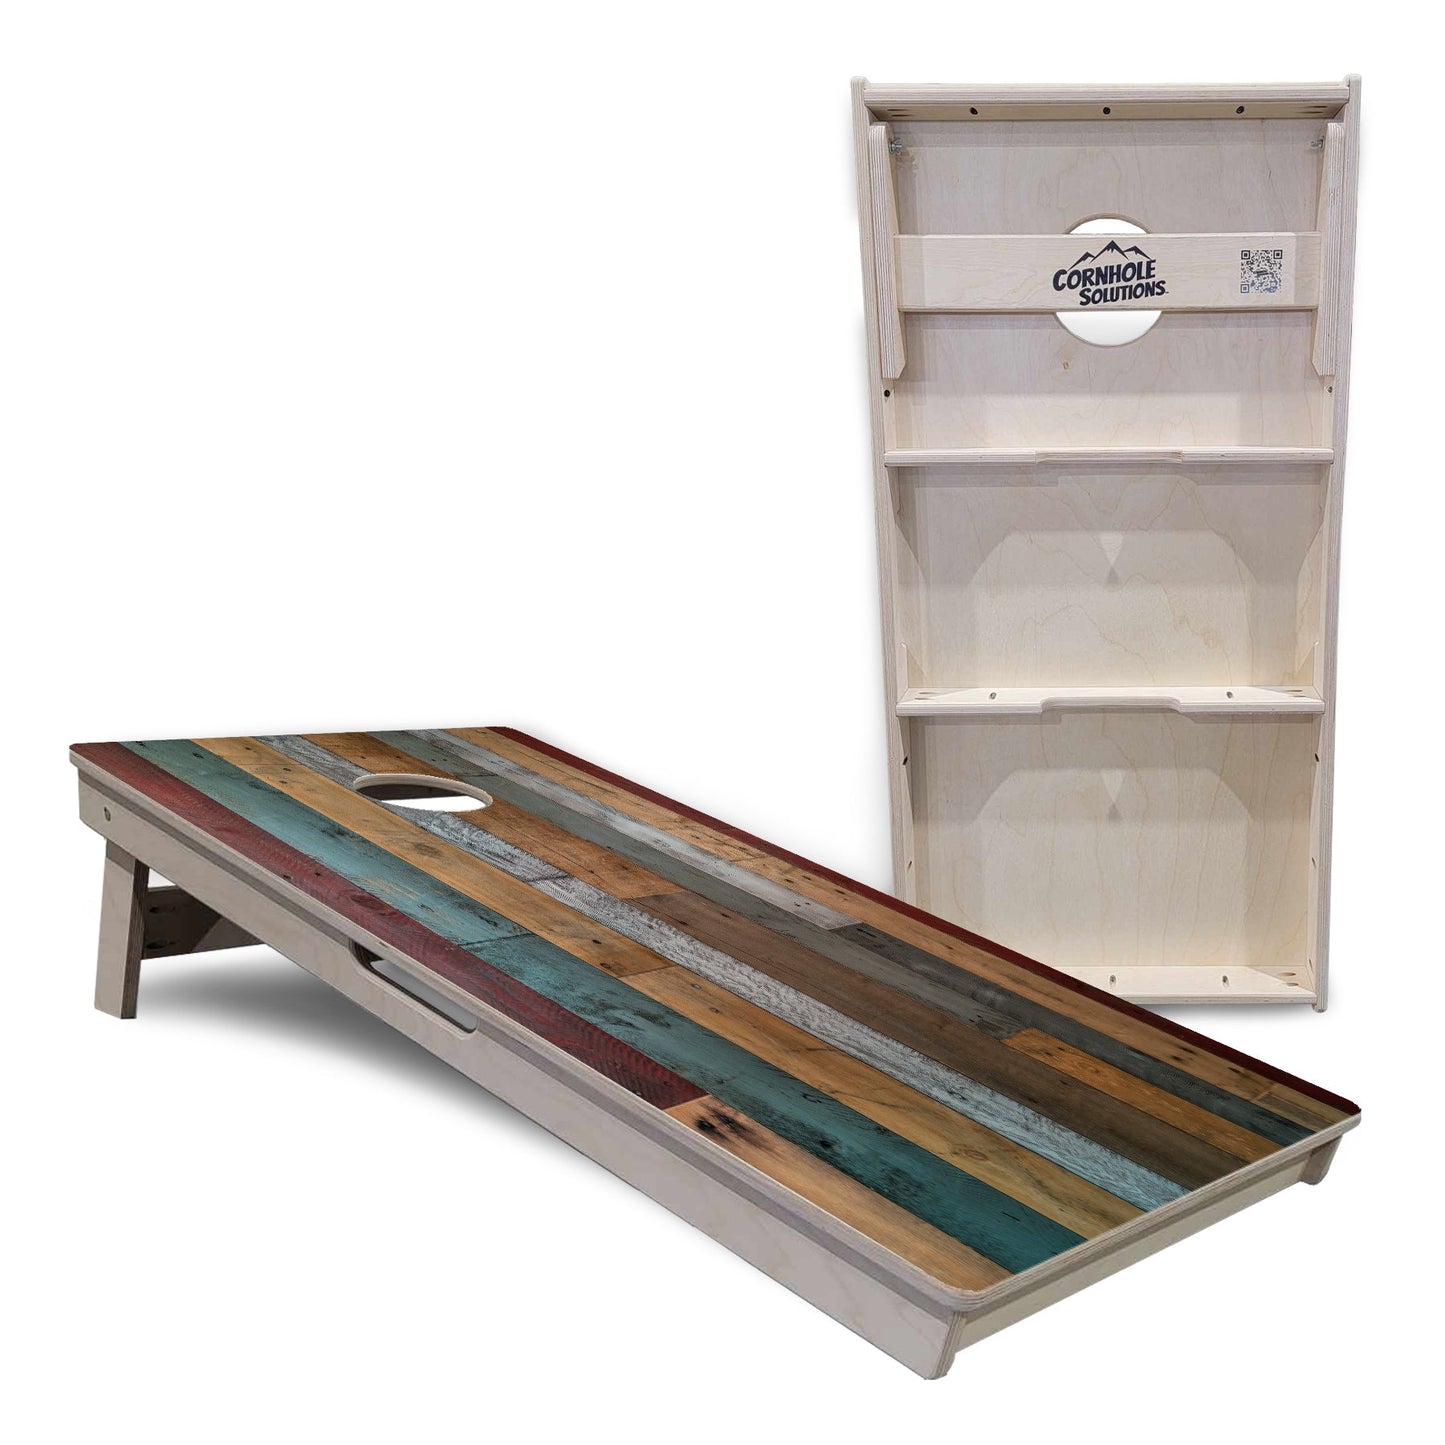 Regulation Cornhole Boards - Metallic Wood Planks - 2'x4' Regulation Cornhole Set - 3/4″ Baltic Birch + UV Direct Print + UV Clear Coat